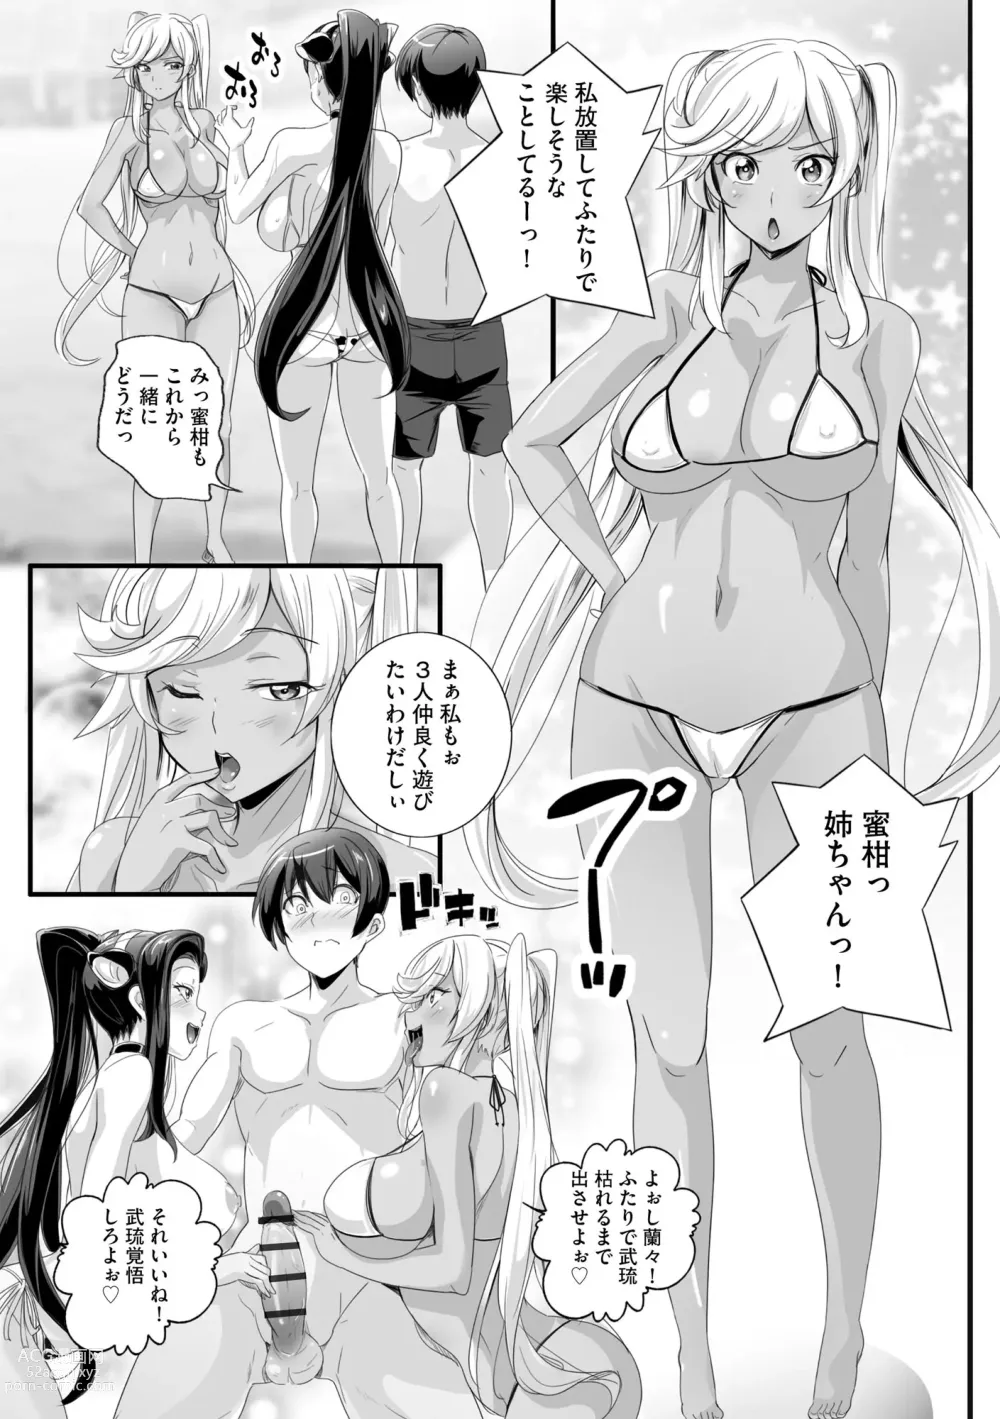 Page 23 of manga Cyberia Plus Vol. 13